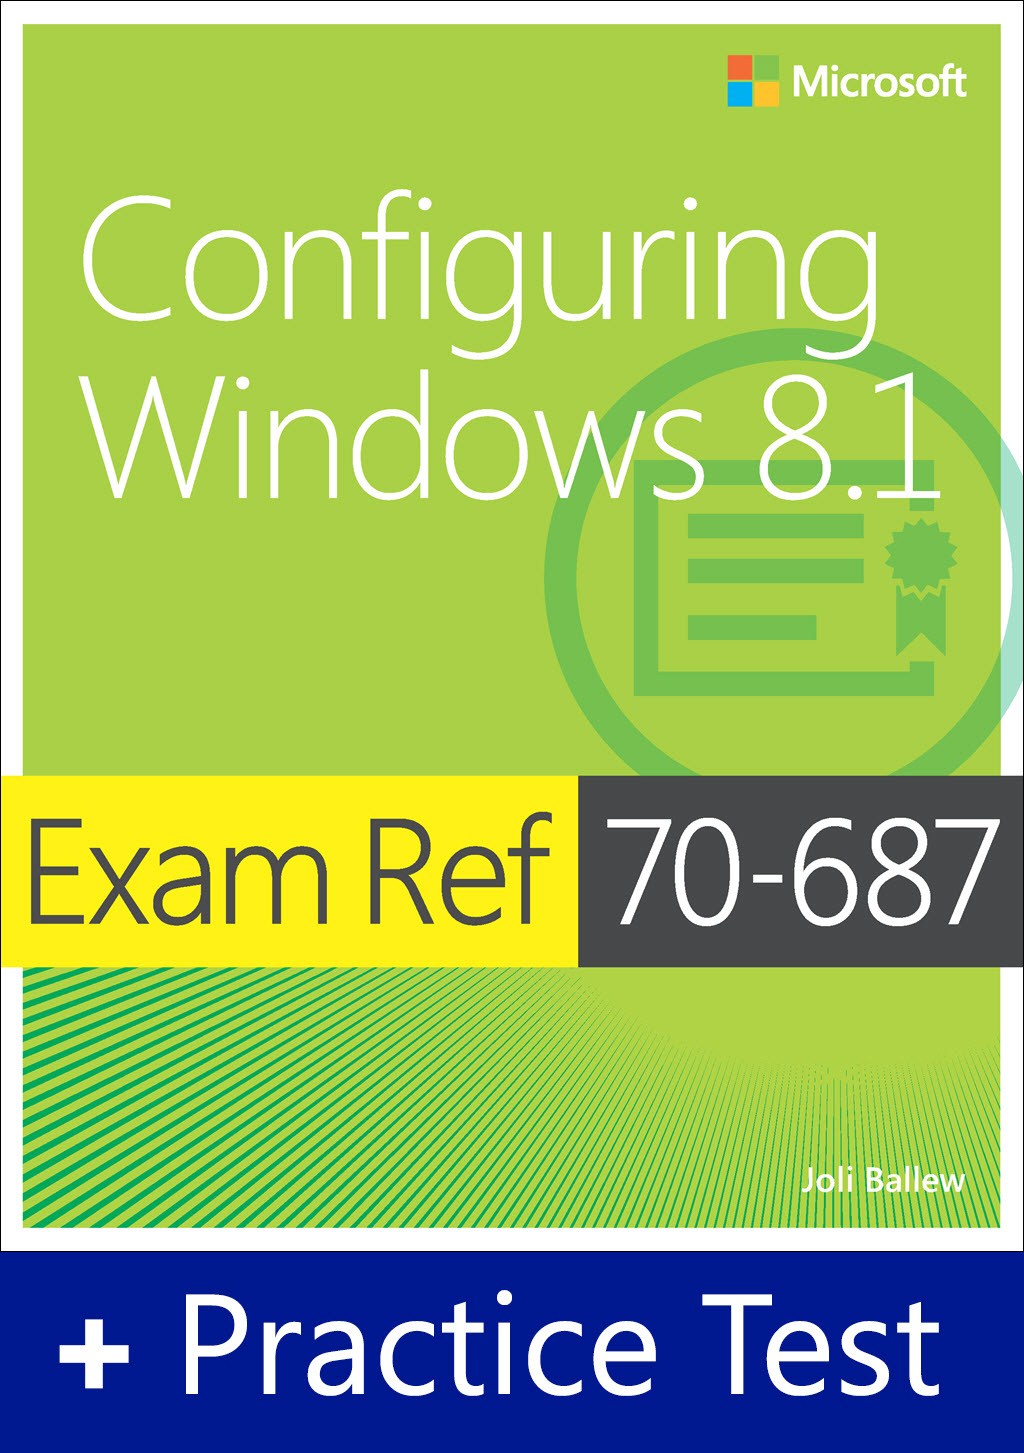 Exam Ref 70-687 Configuring Windows 8.1 with Practice Test